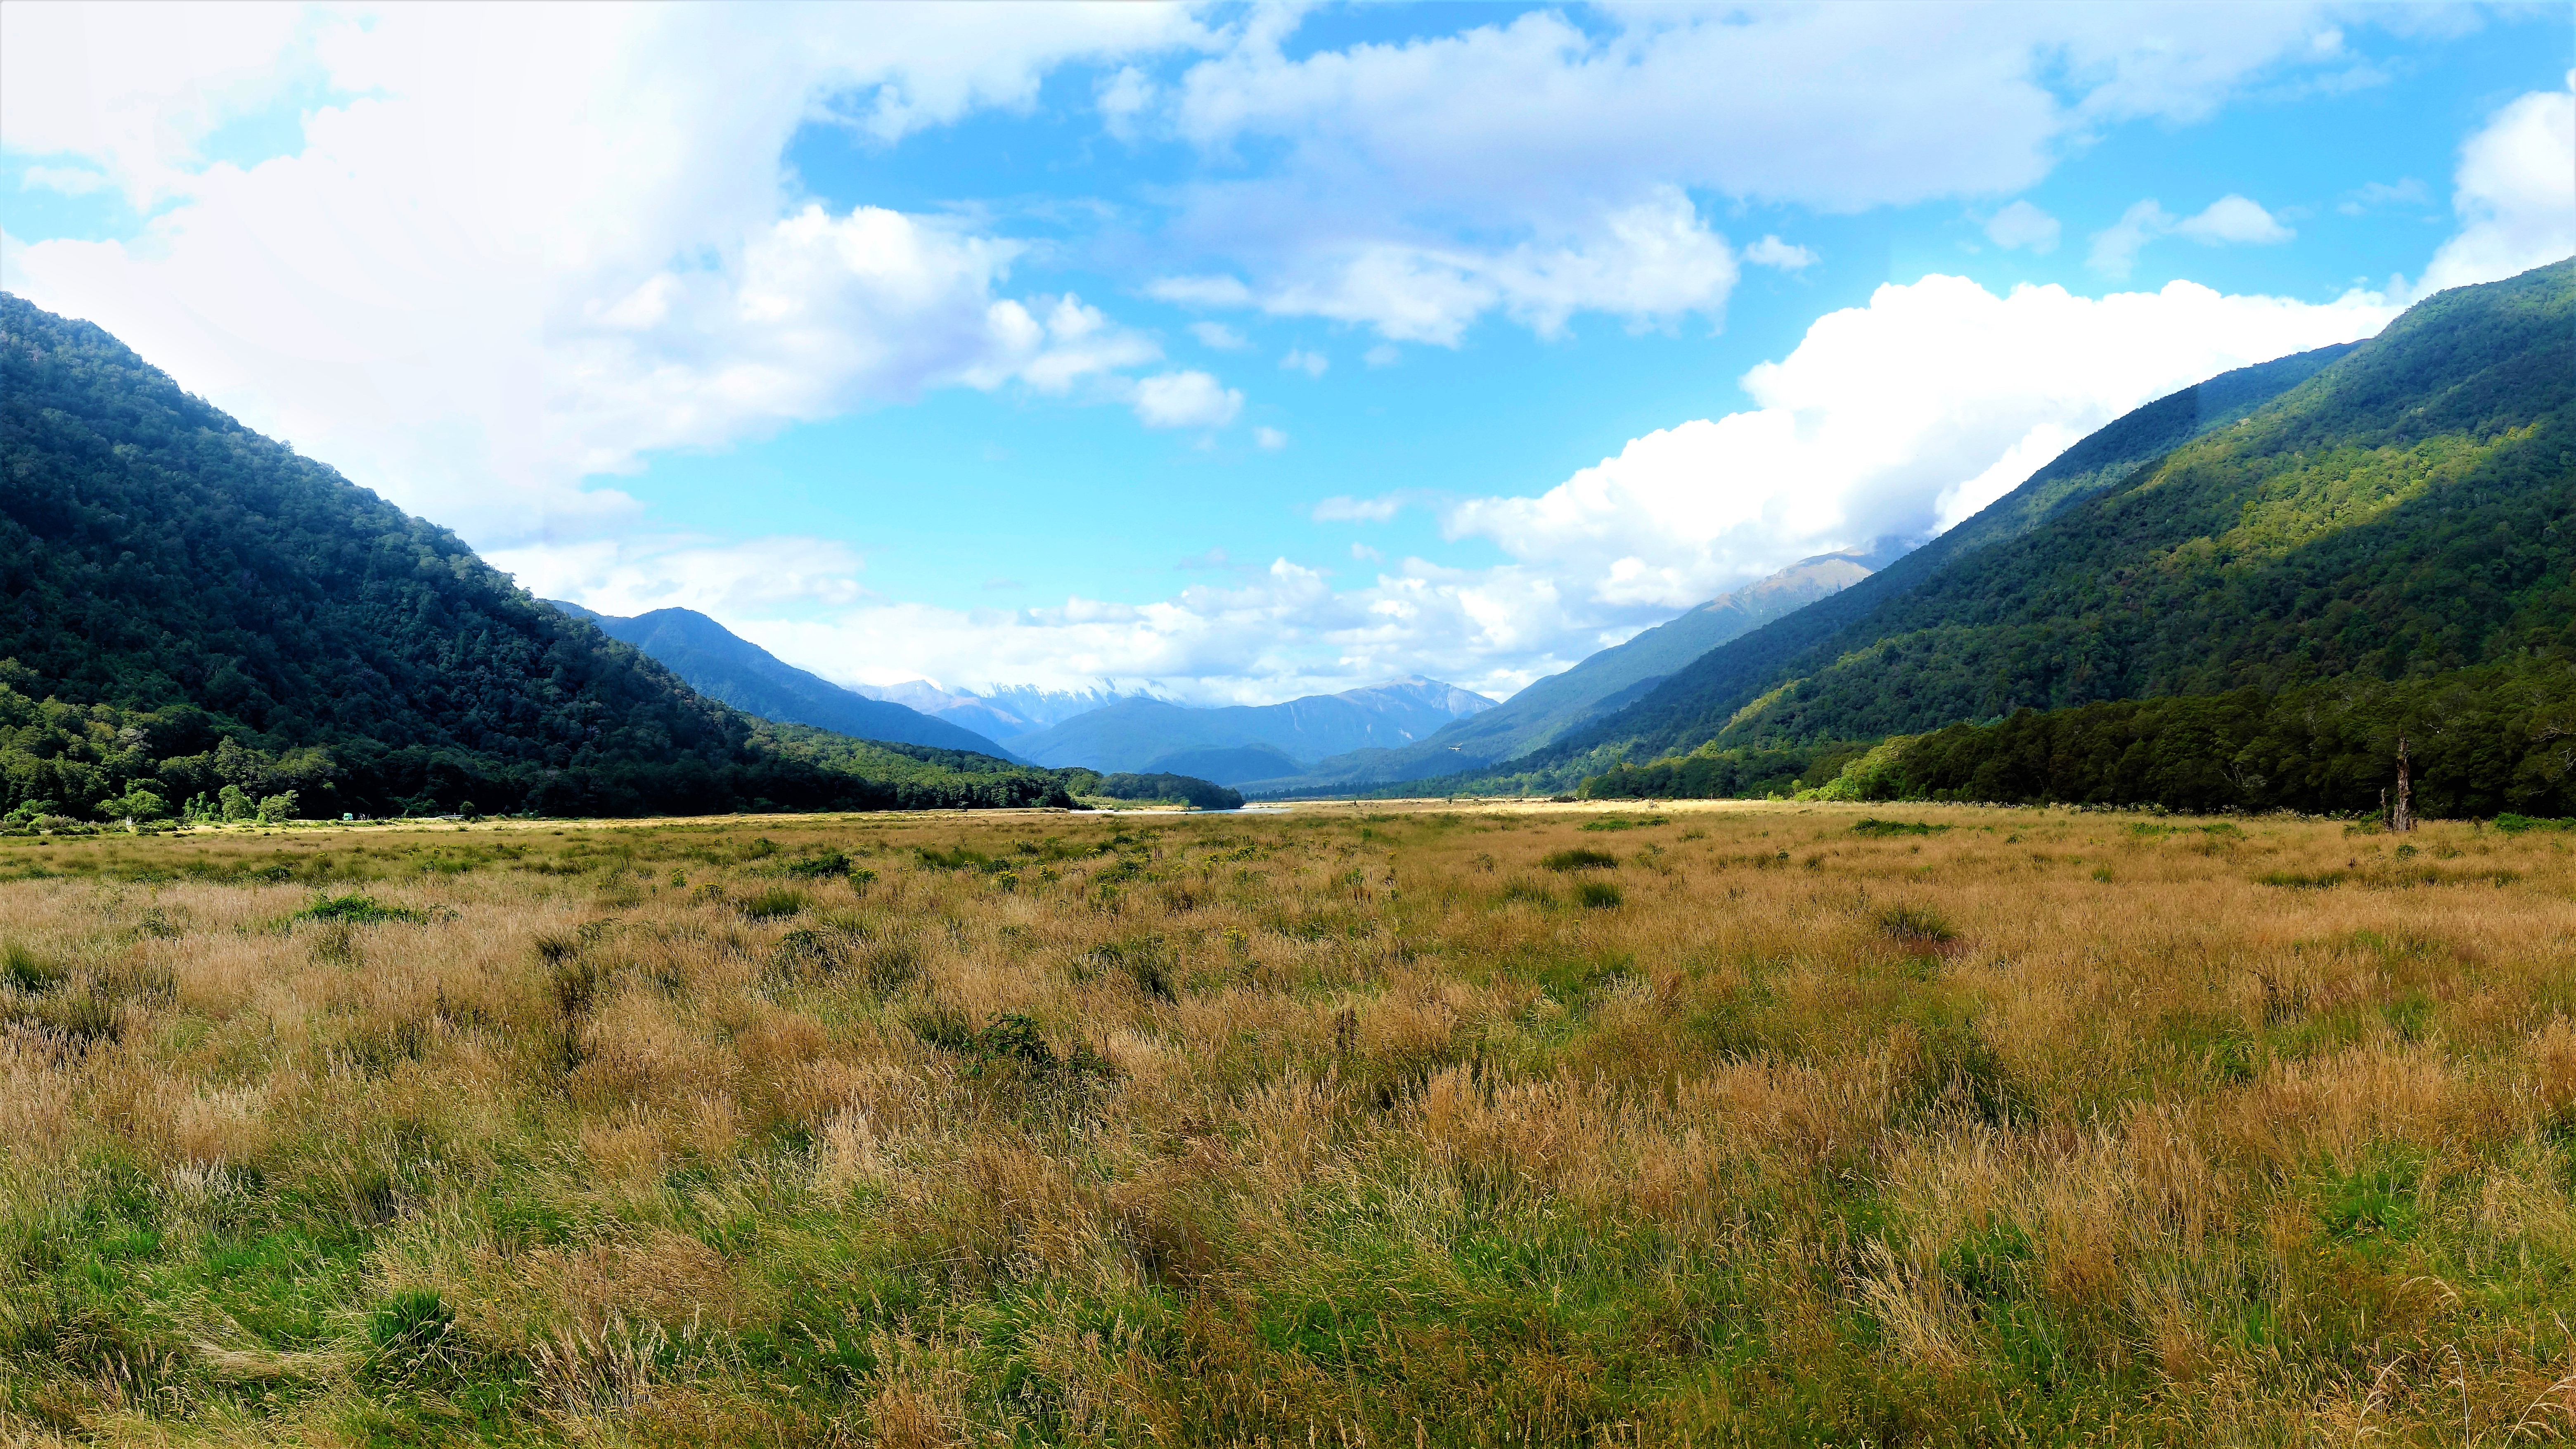 General 6240x3510 New Zealand valley nature landscape grass plants